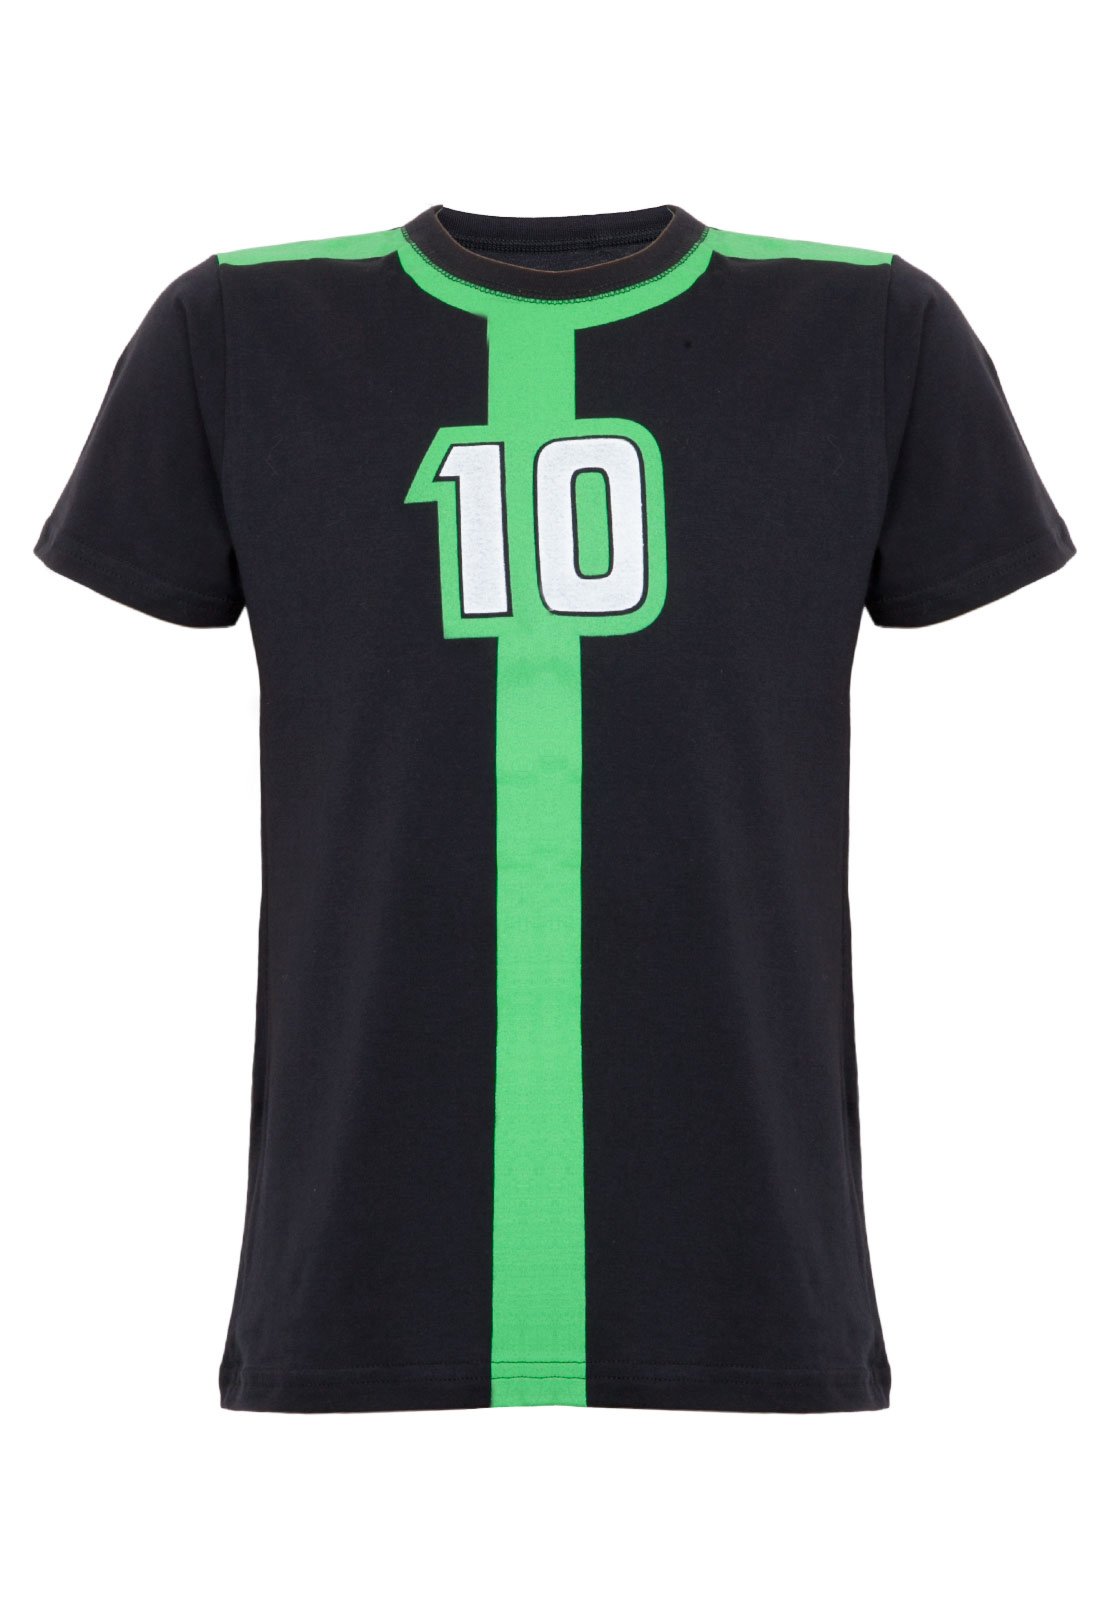 Ben 10 omniverse verde e preto T-Shirt t-shirt preto t camisa